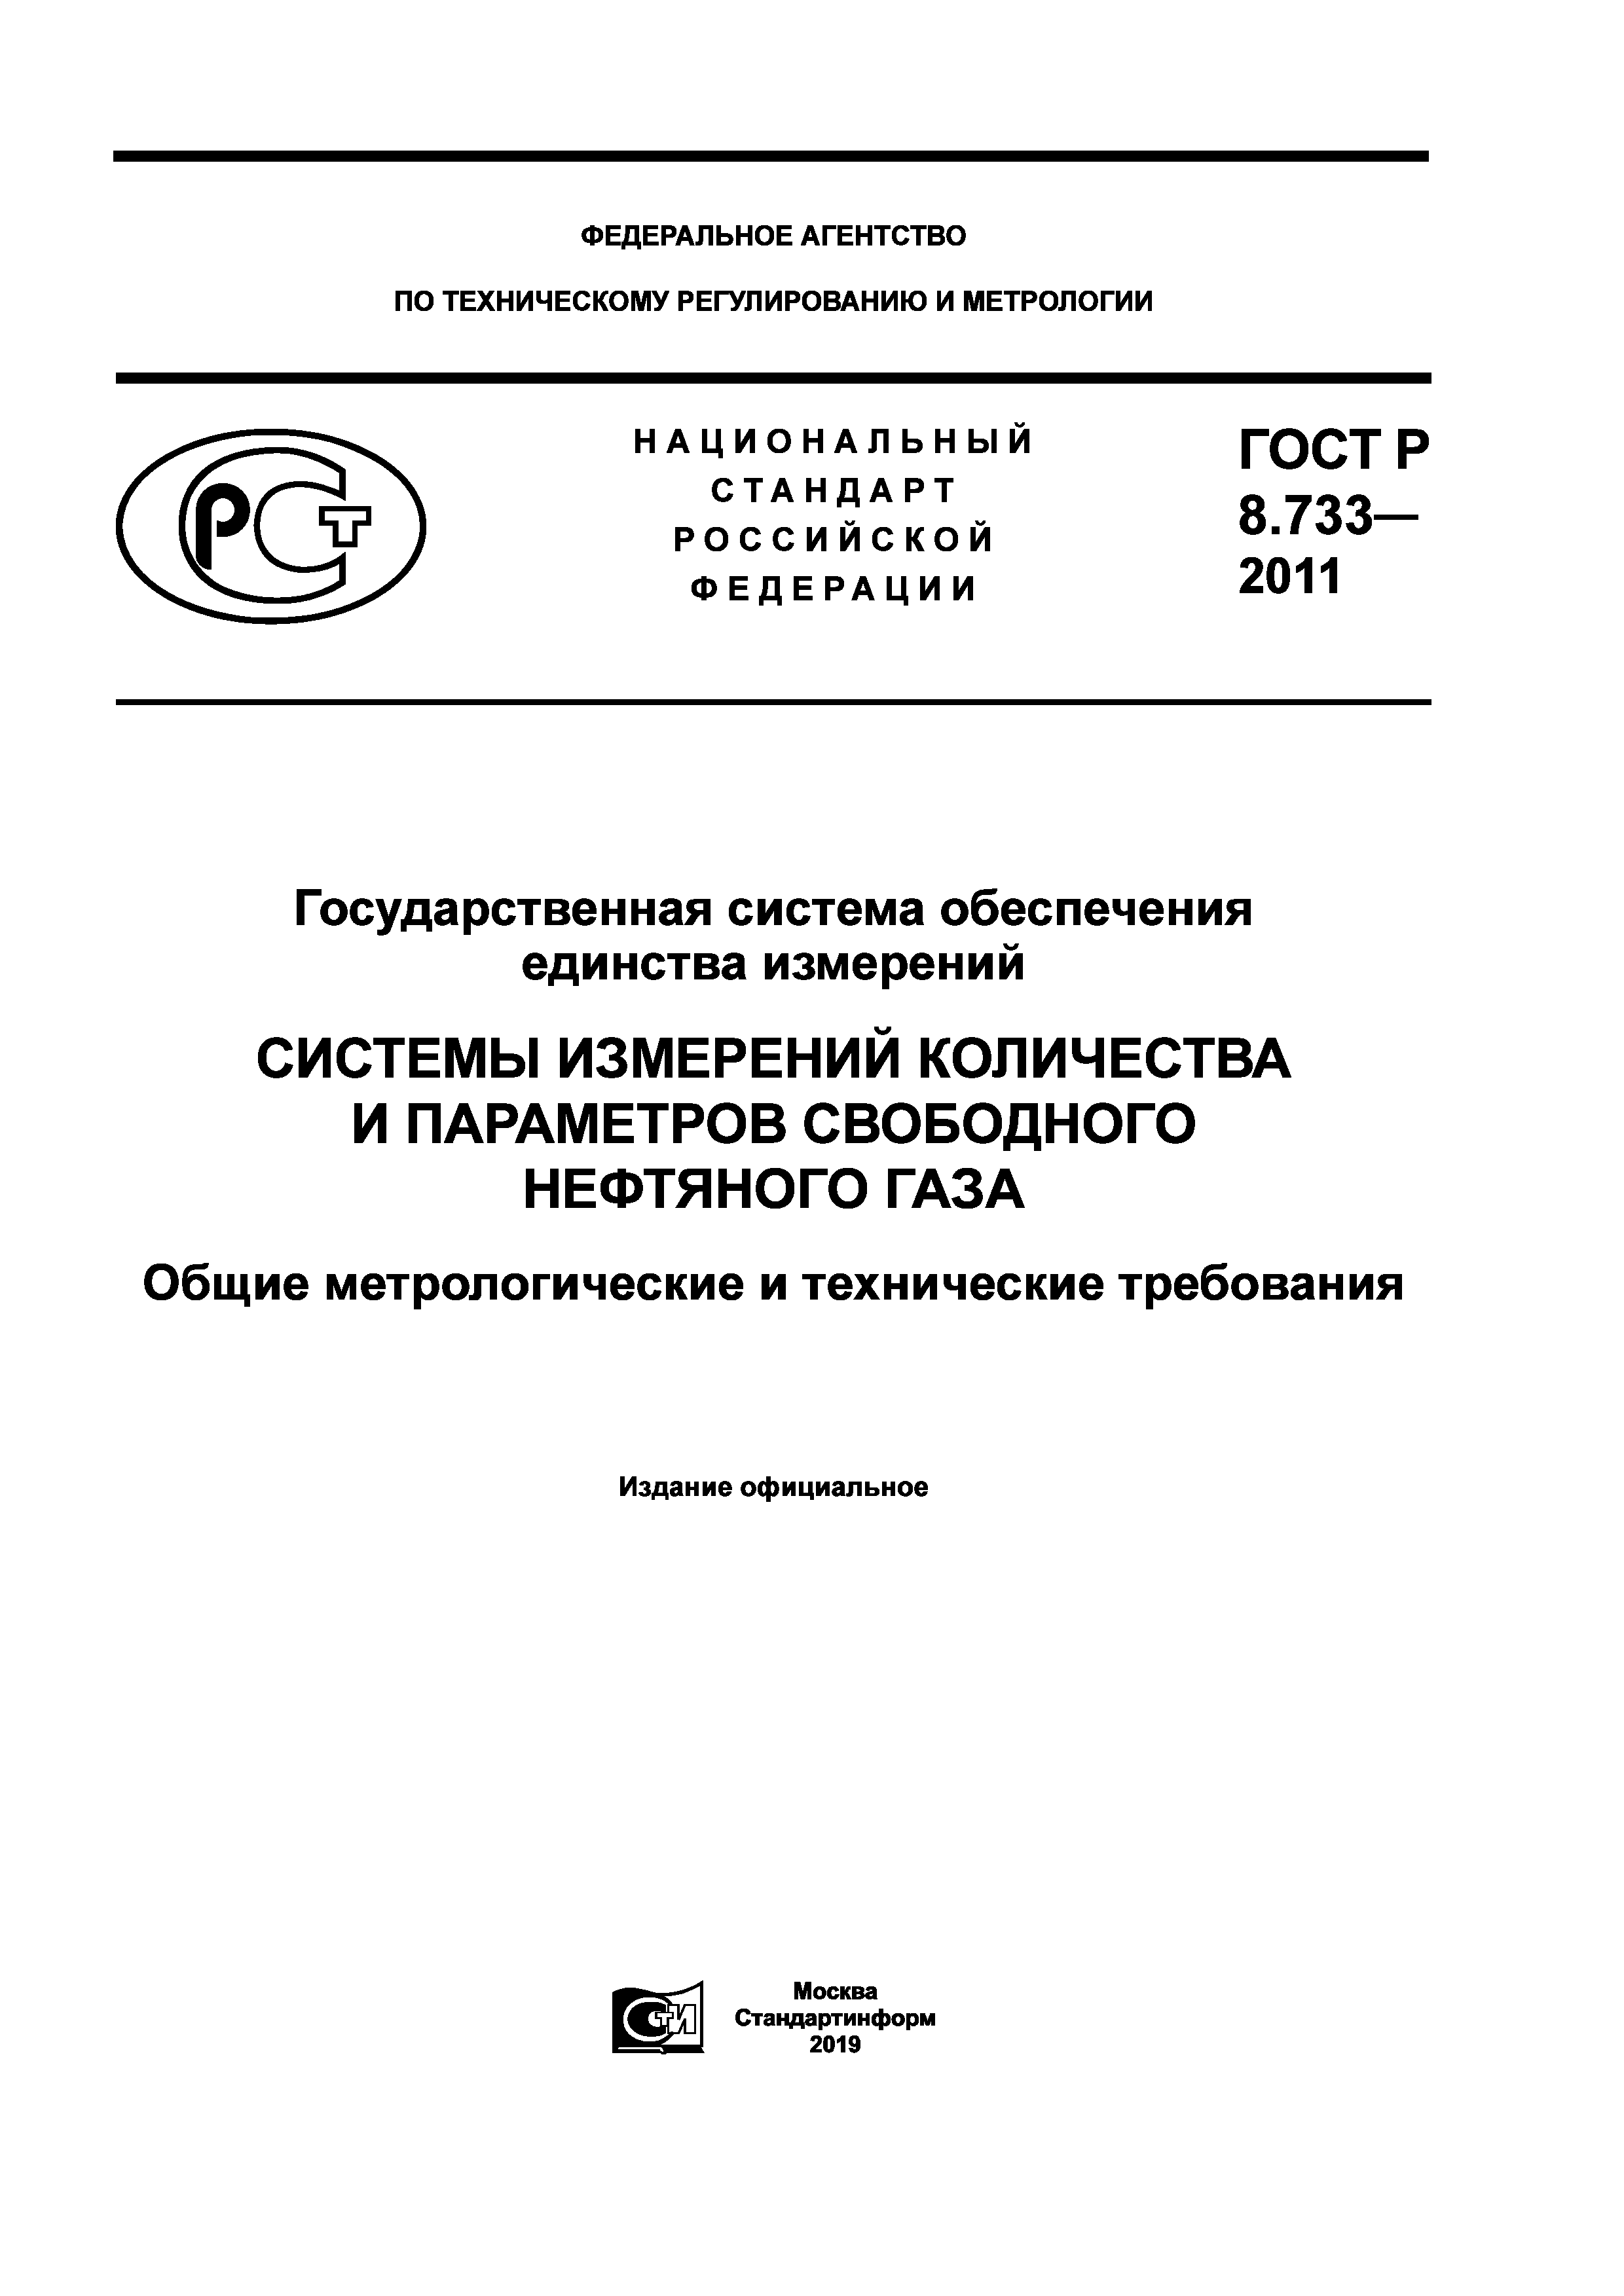 ГОСТ Р 8.733-2011